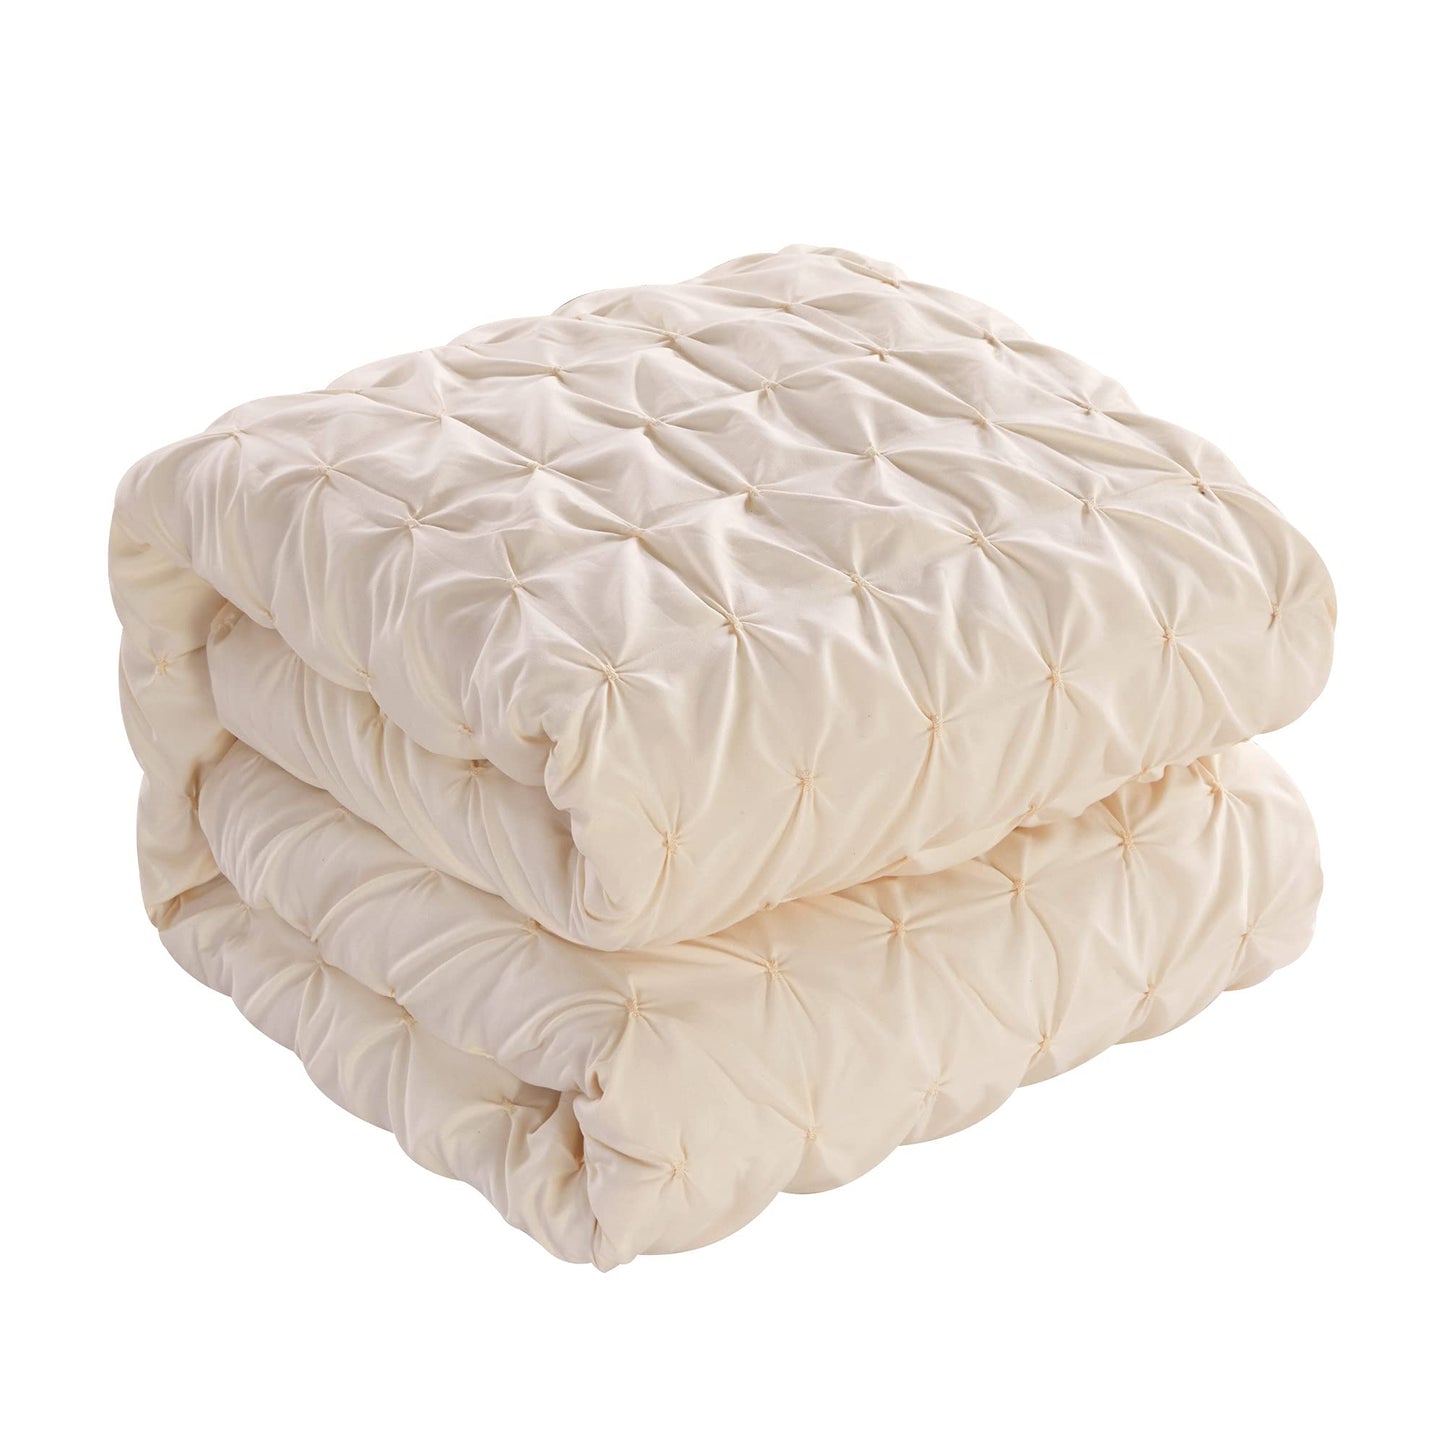 Chic Home Mercer 8 Piece Comforter Pinch Pleat Box Design Bag Bedding-Sheet Set Decorative Pillow Shams Included, King, Beige